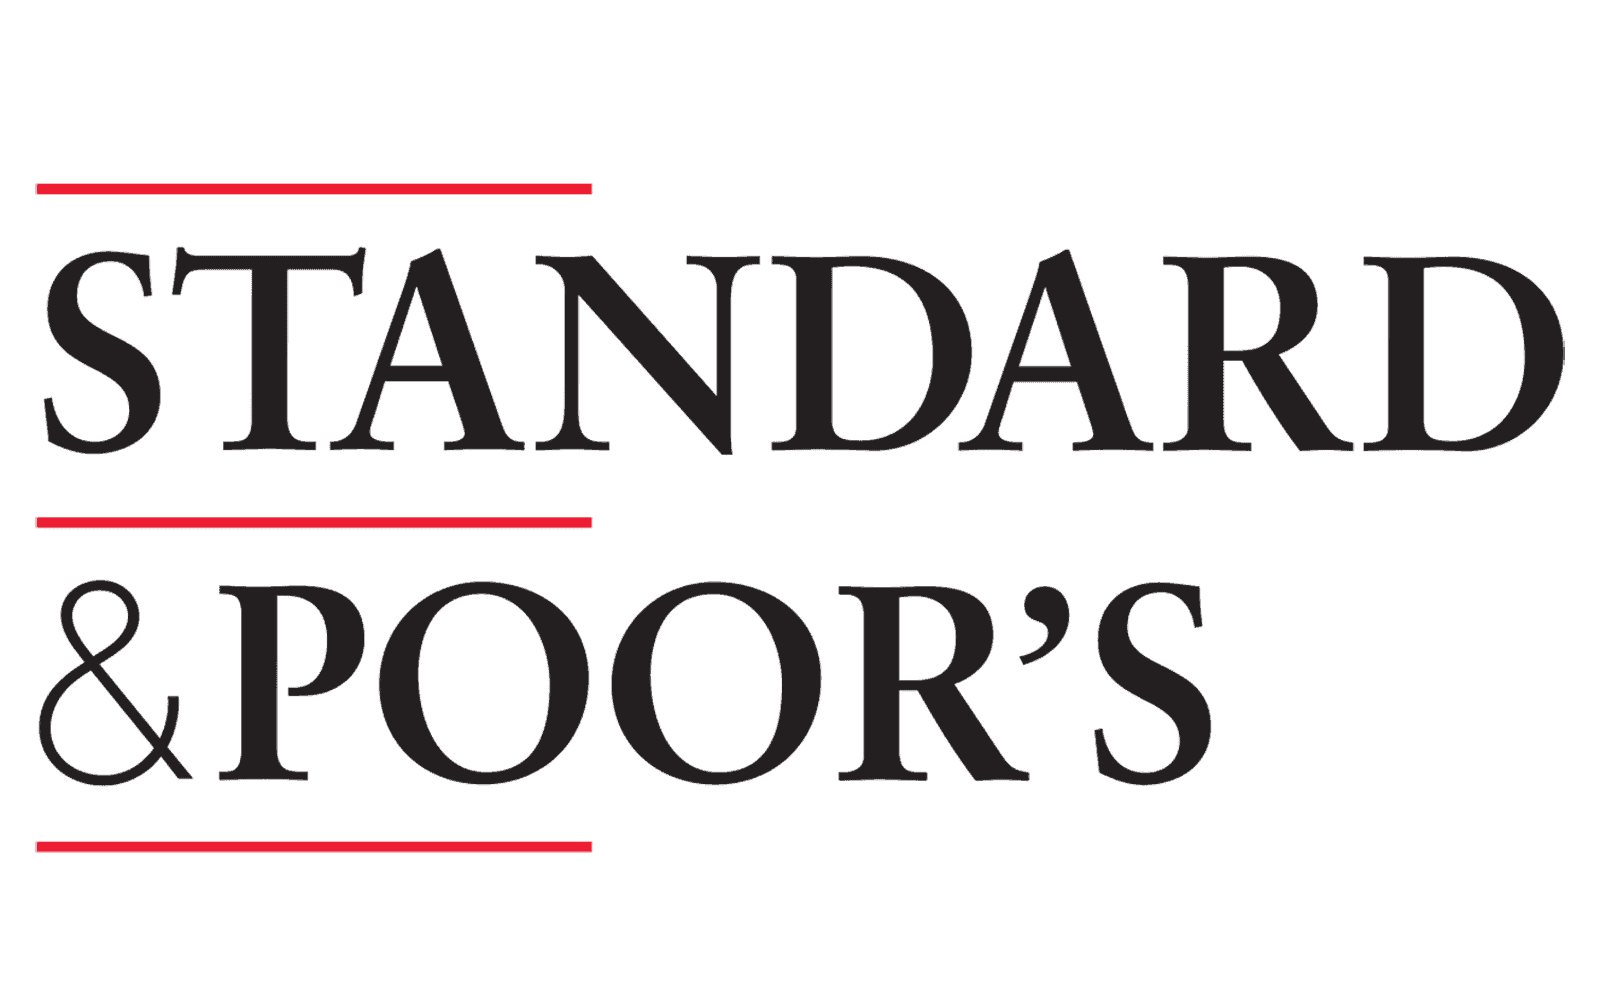 P s bank. Standard and poors logo. Standard & poor’s. Standard poor s логотип. S P 500 лого.